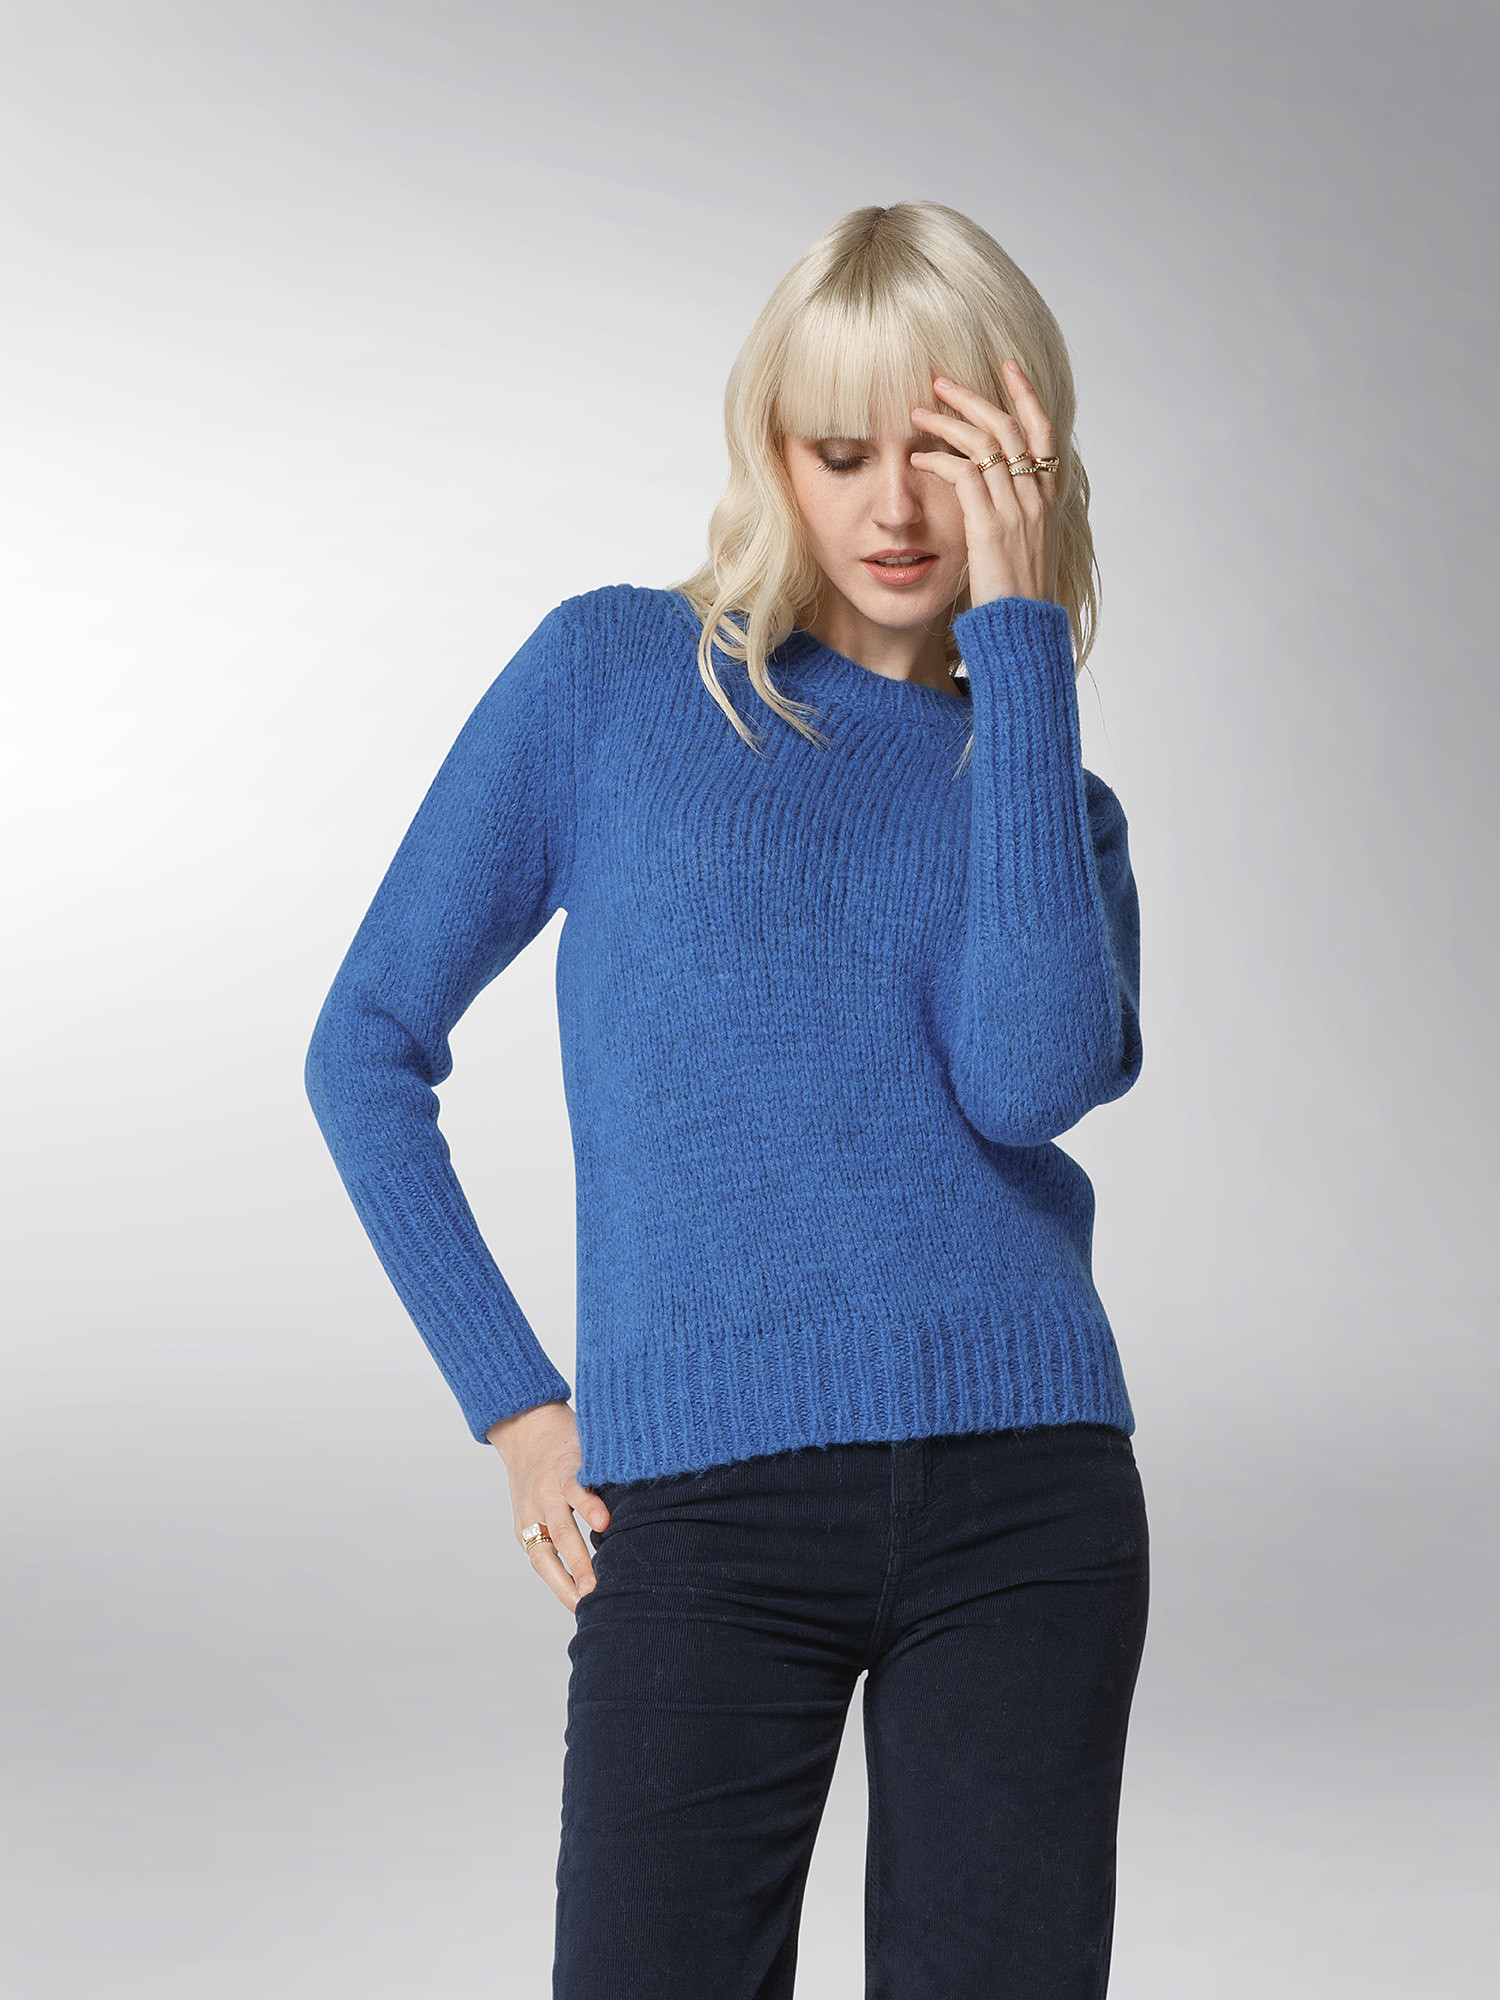 K Collection - Crewneck sweater, Blue, large image number 4